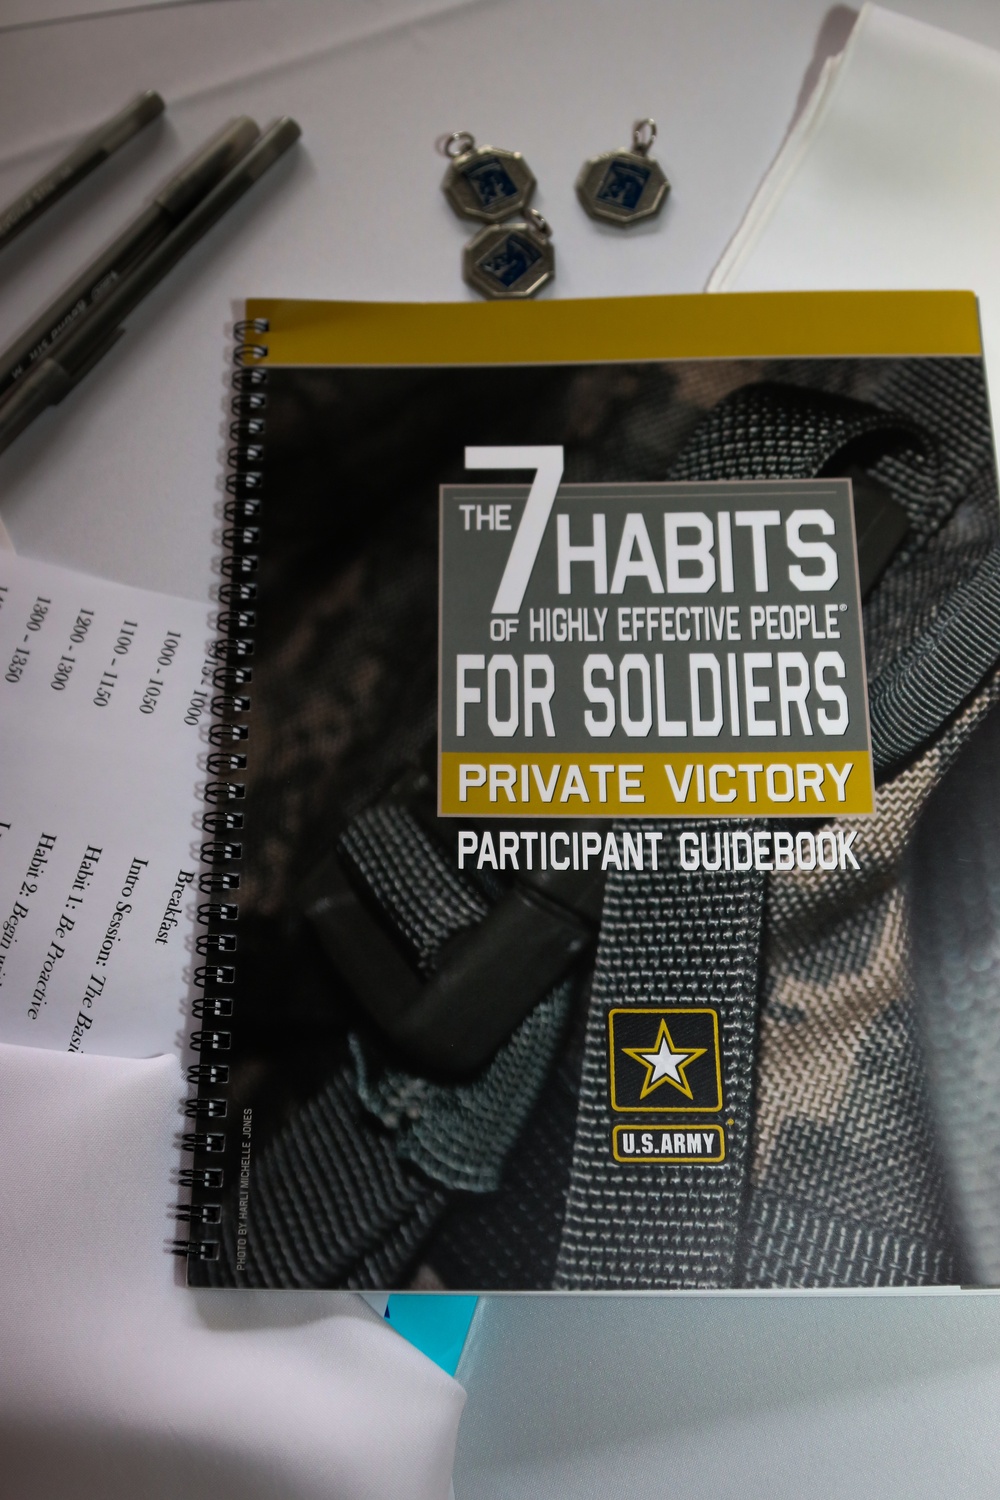 XVIII Airborne Corps singles retreat instills healthy habits